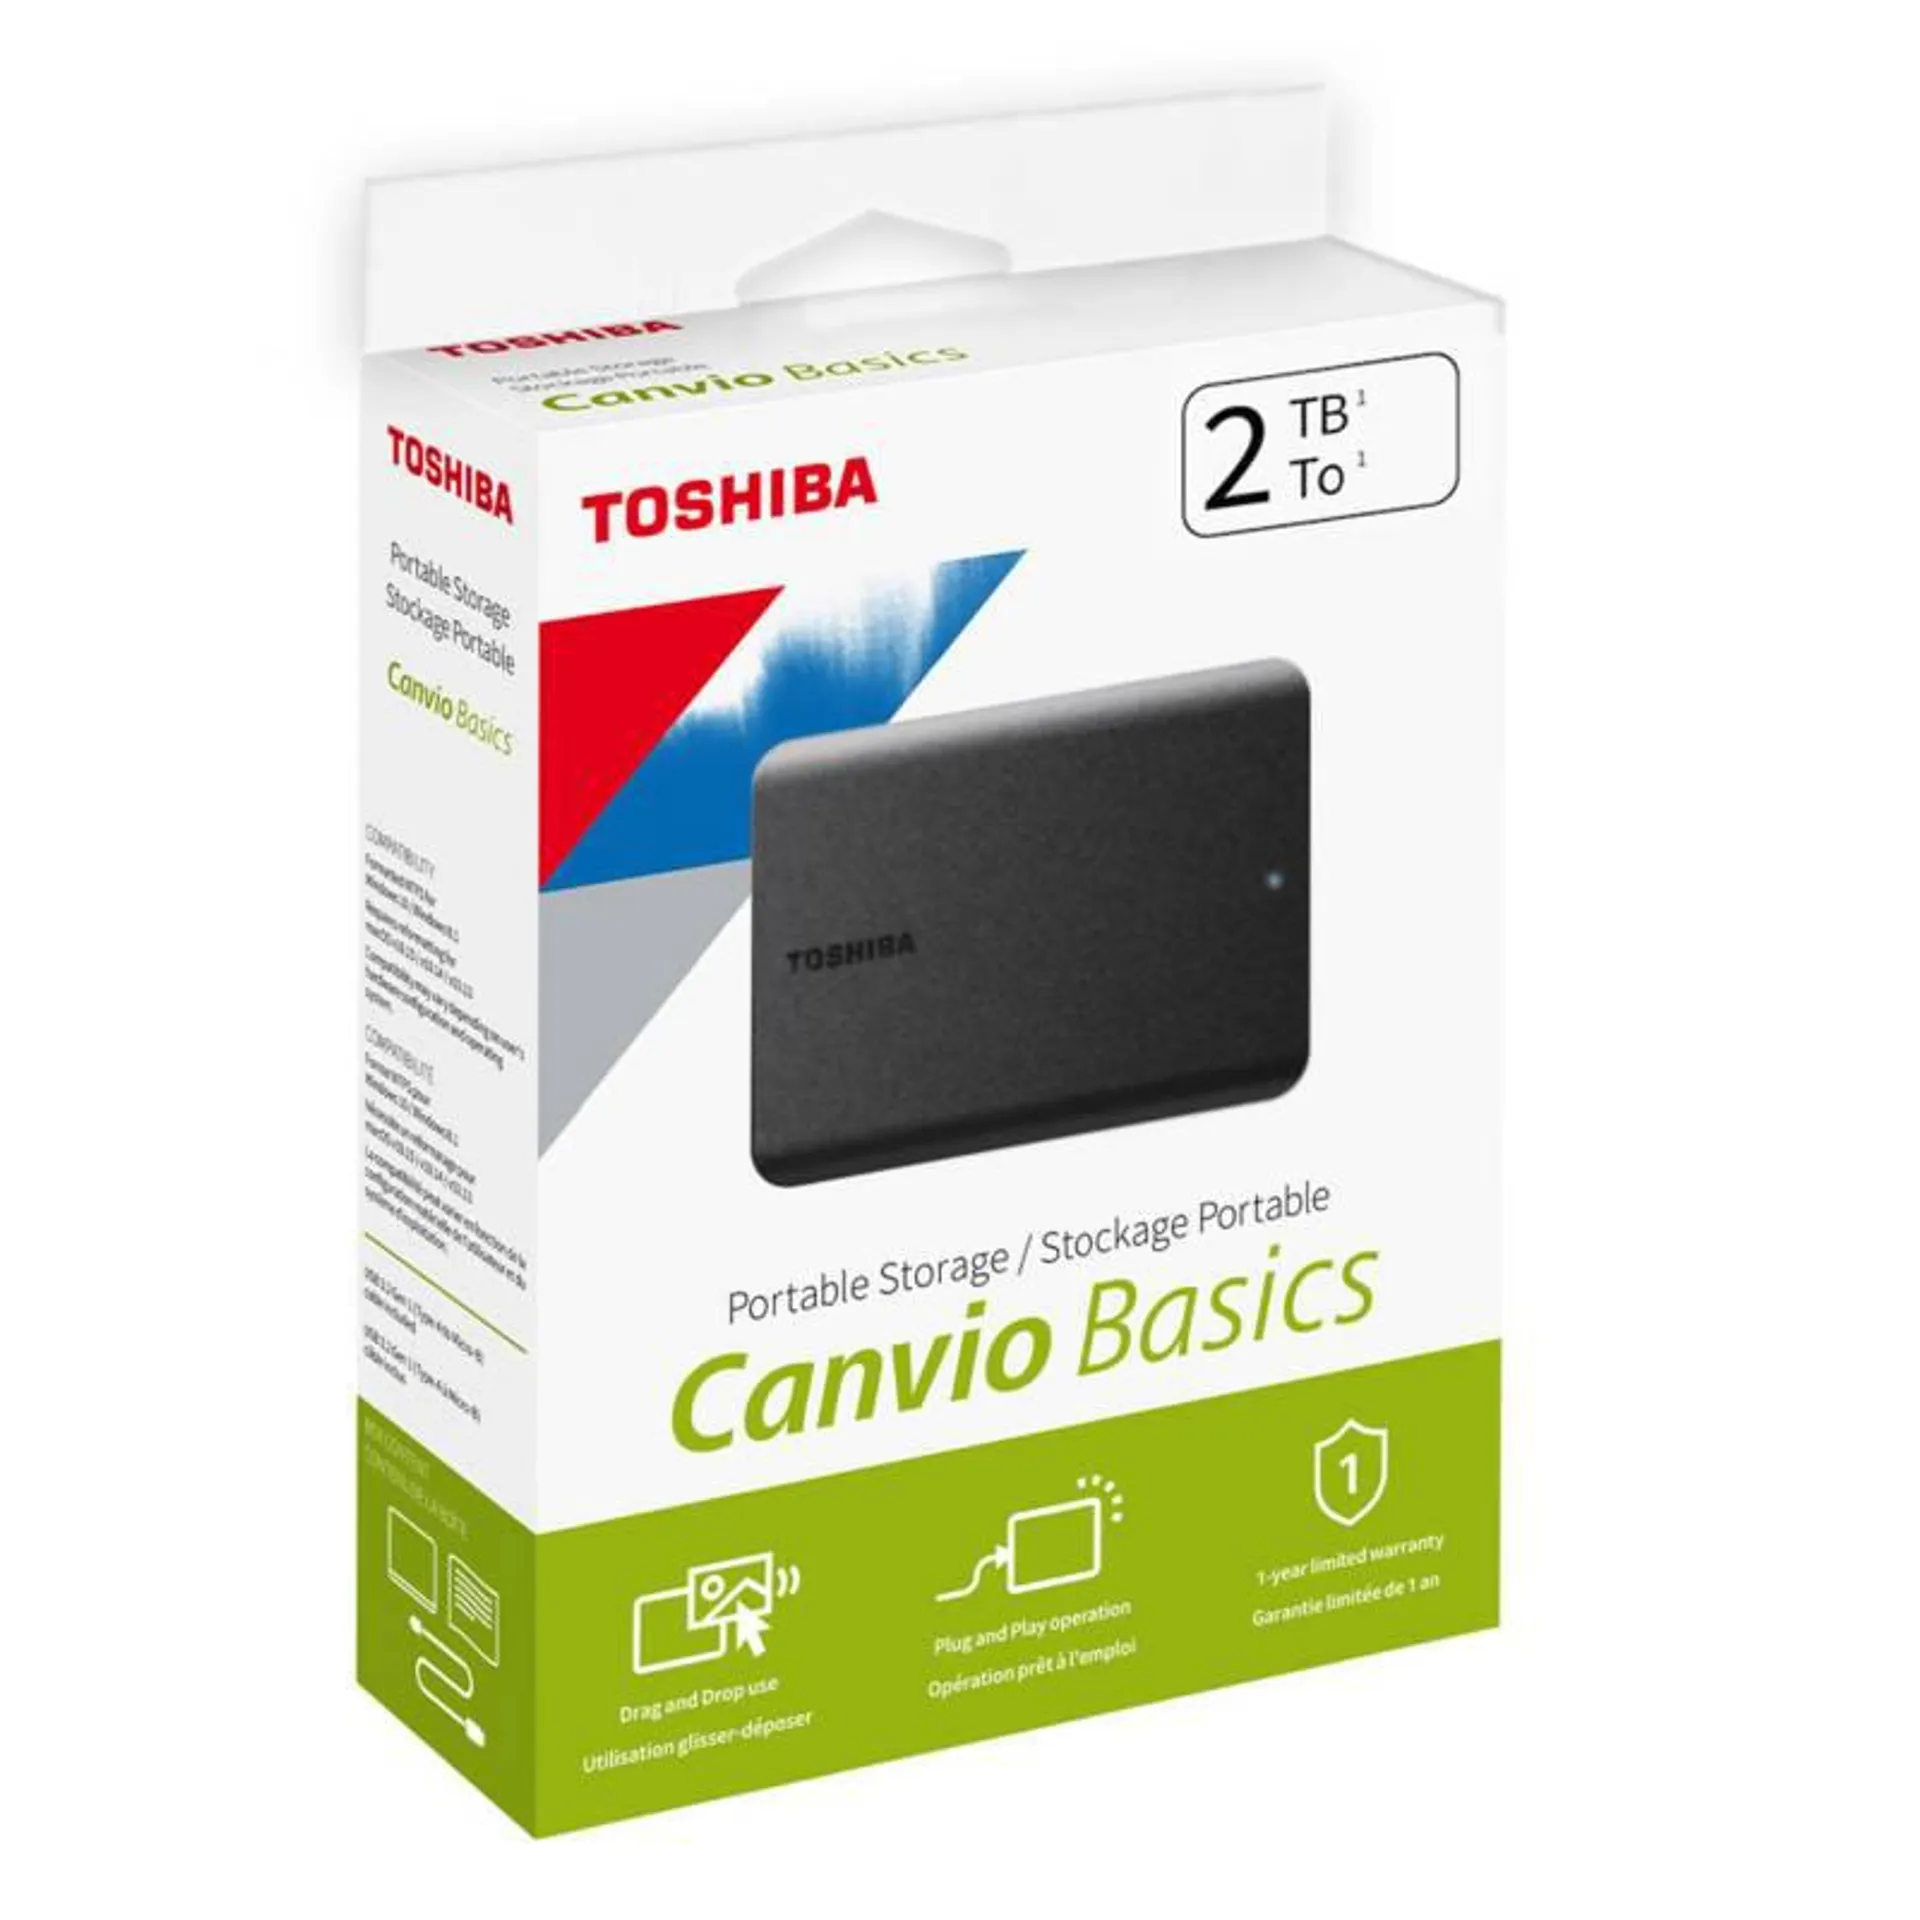 DISCO EXTERNO 2 TB TOSHIBA CANVIO BASICS USB 3.0